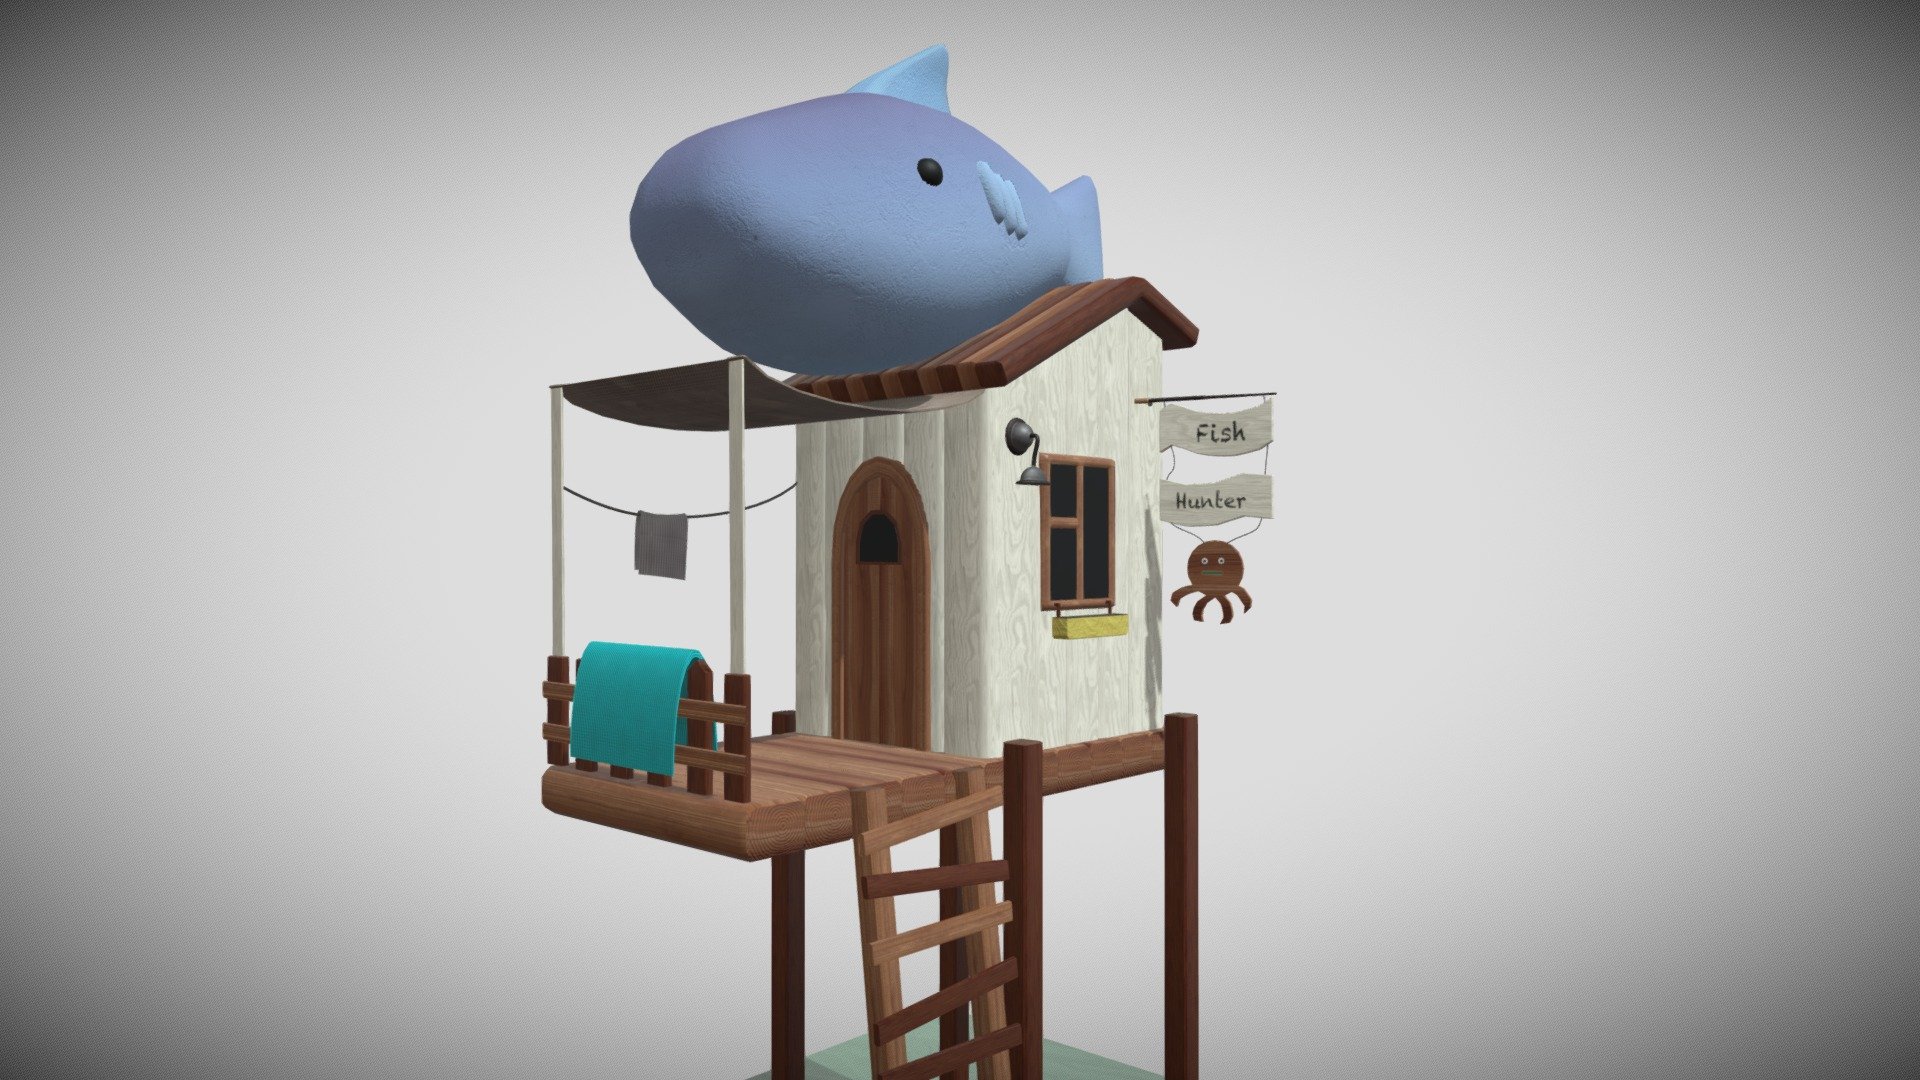 A fisherman's hideaway - Fisherman hut - 3D model by Wgward3D 3d model